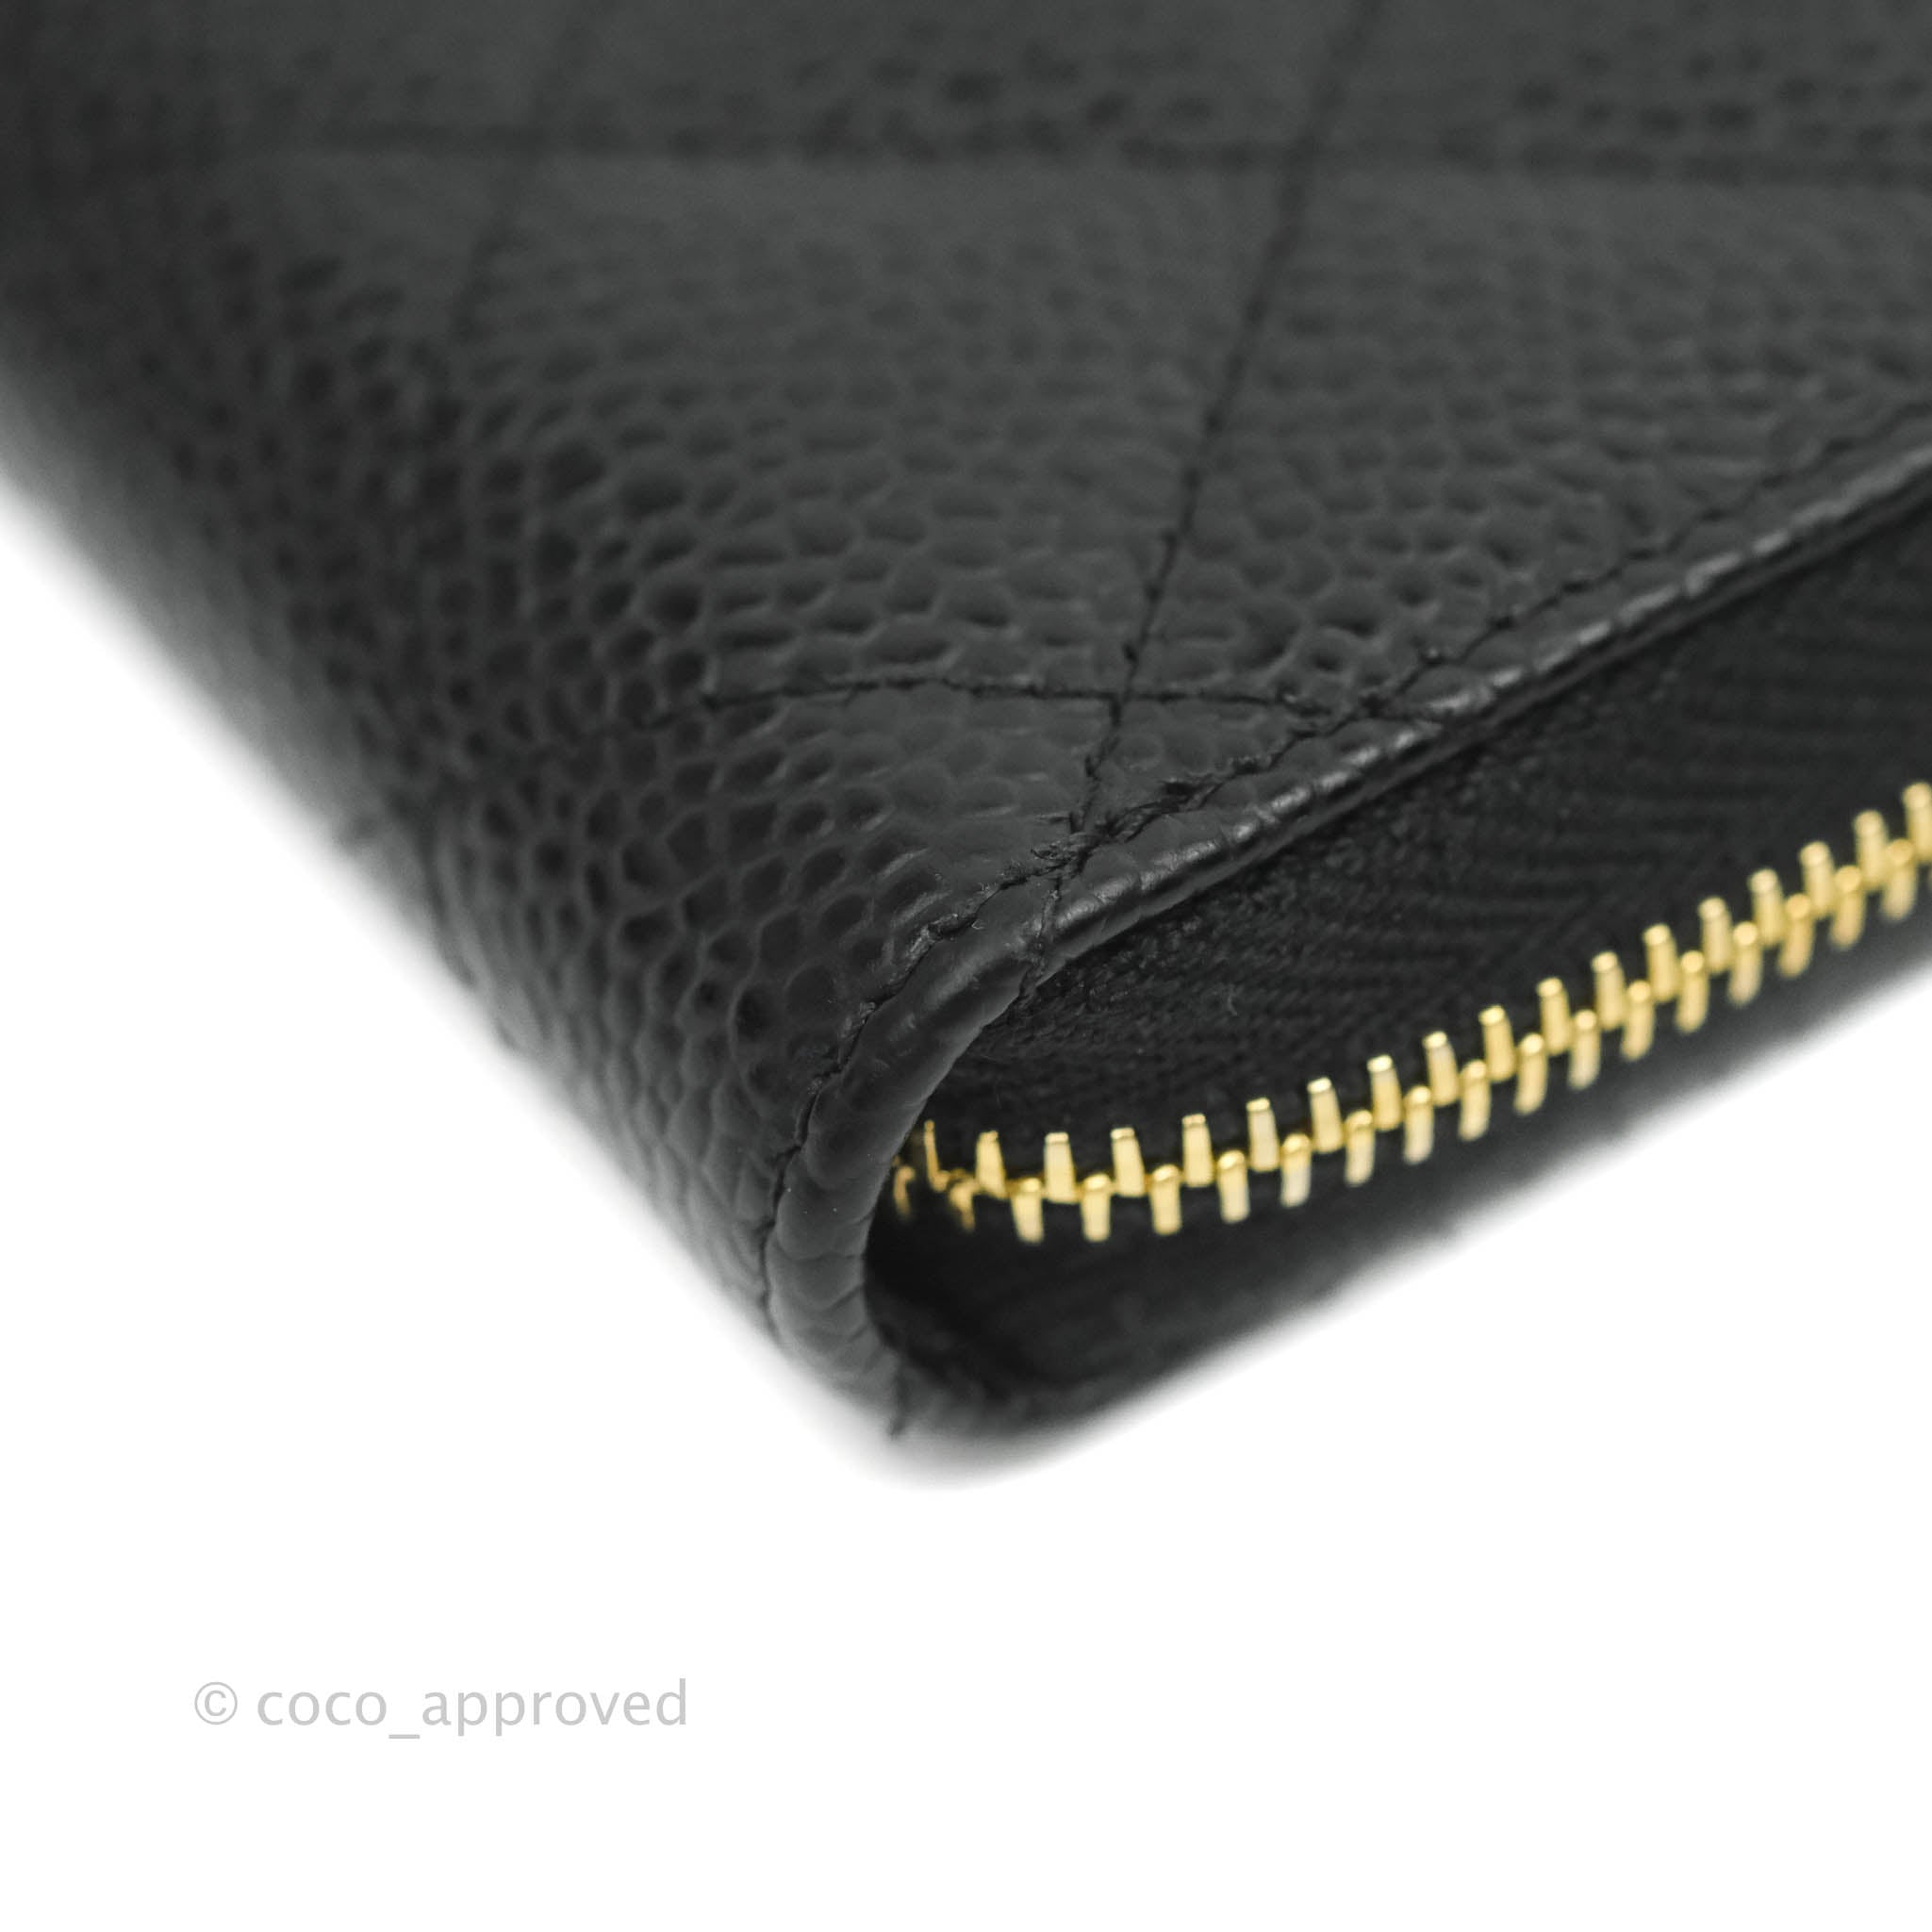 Chanel Beige Caviar 'CC' Zip-Around Coin Purse Q6A1VK0FIB000